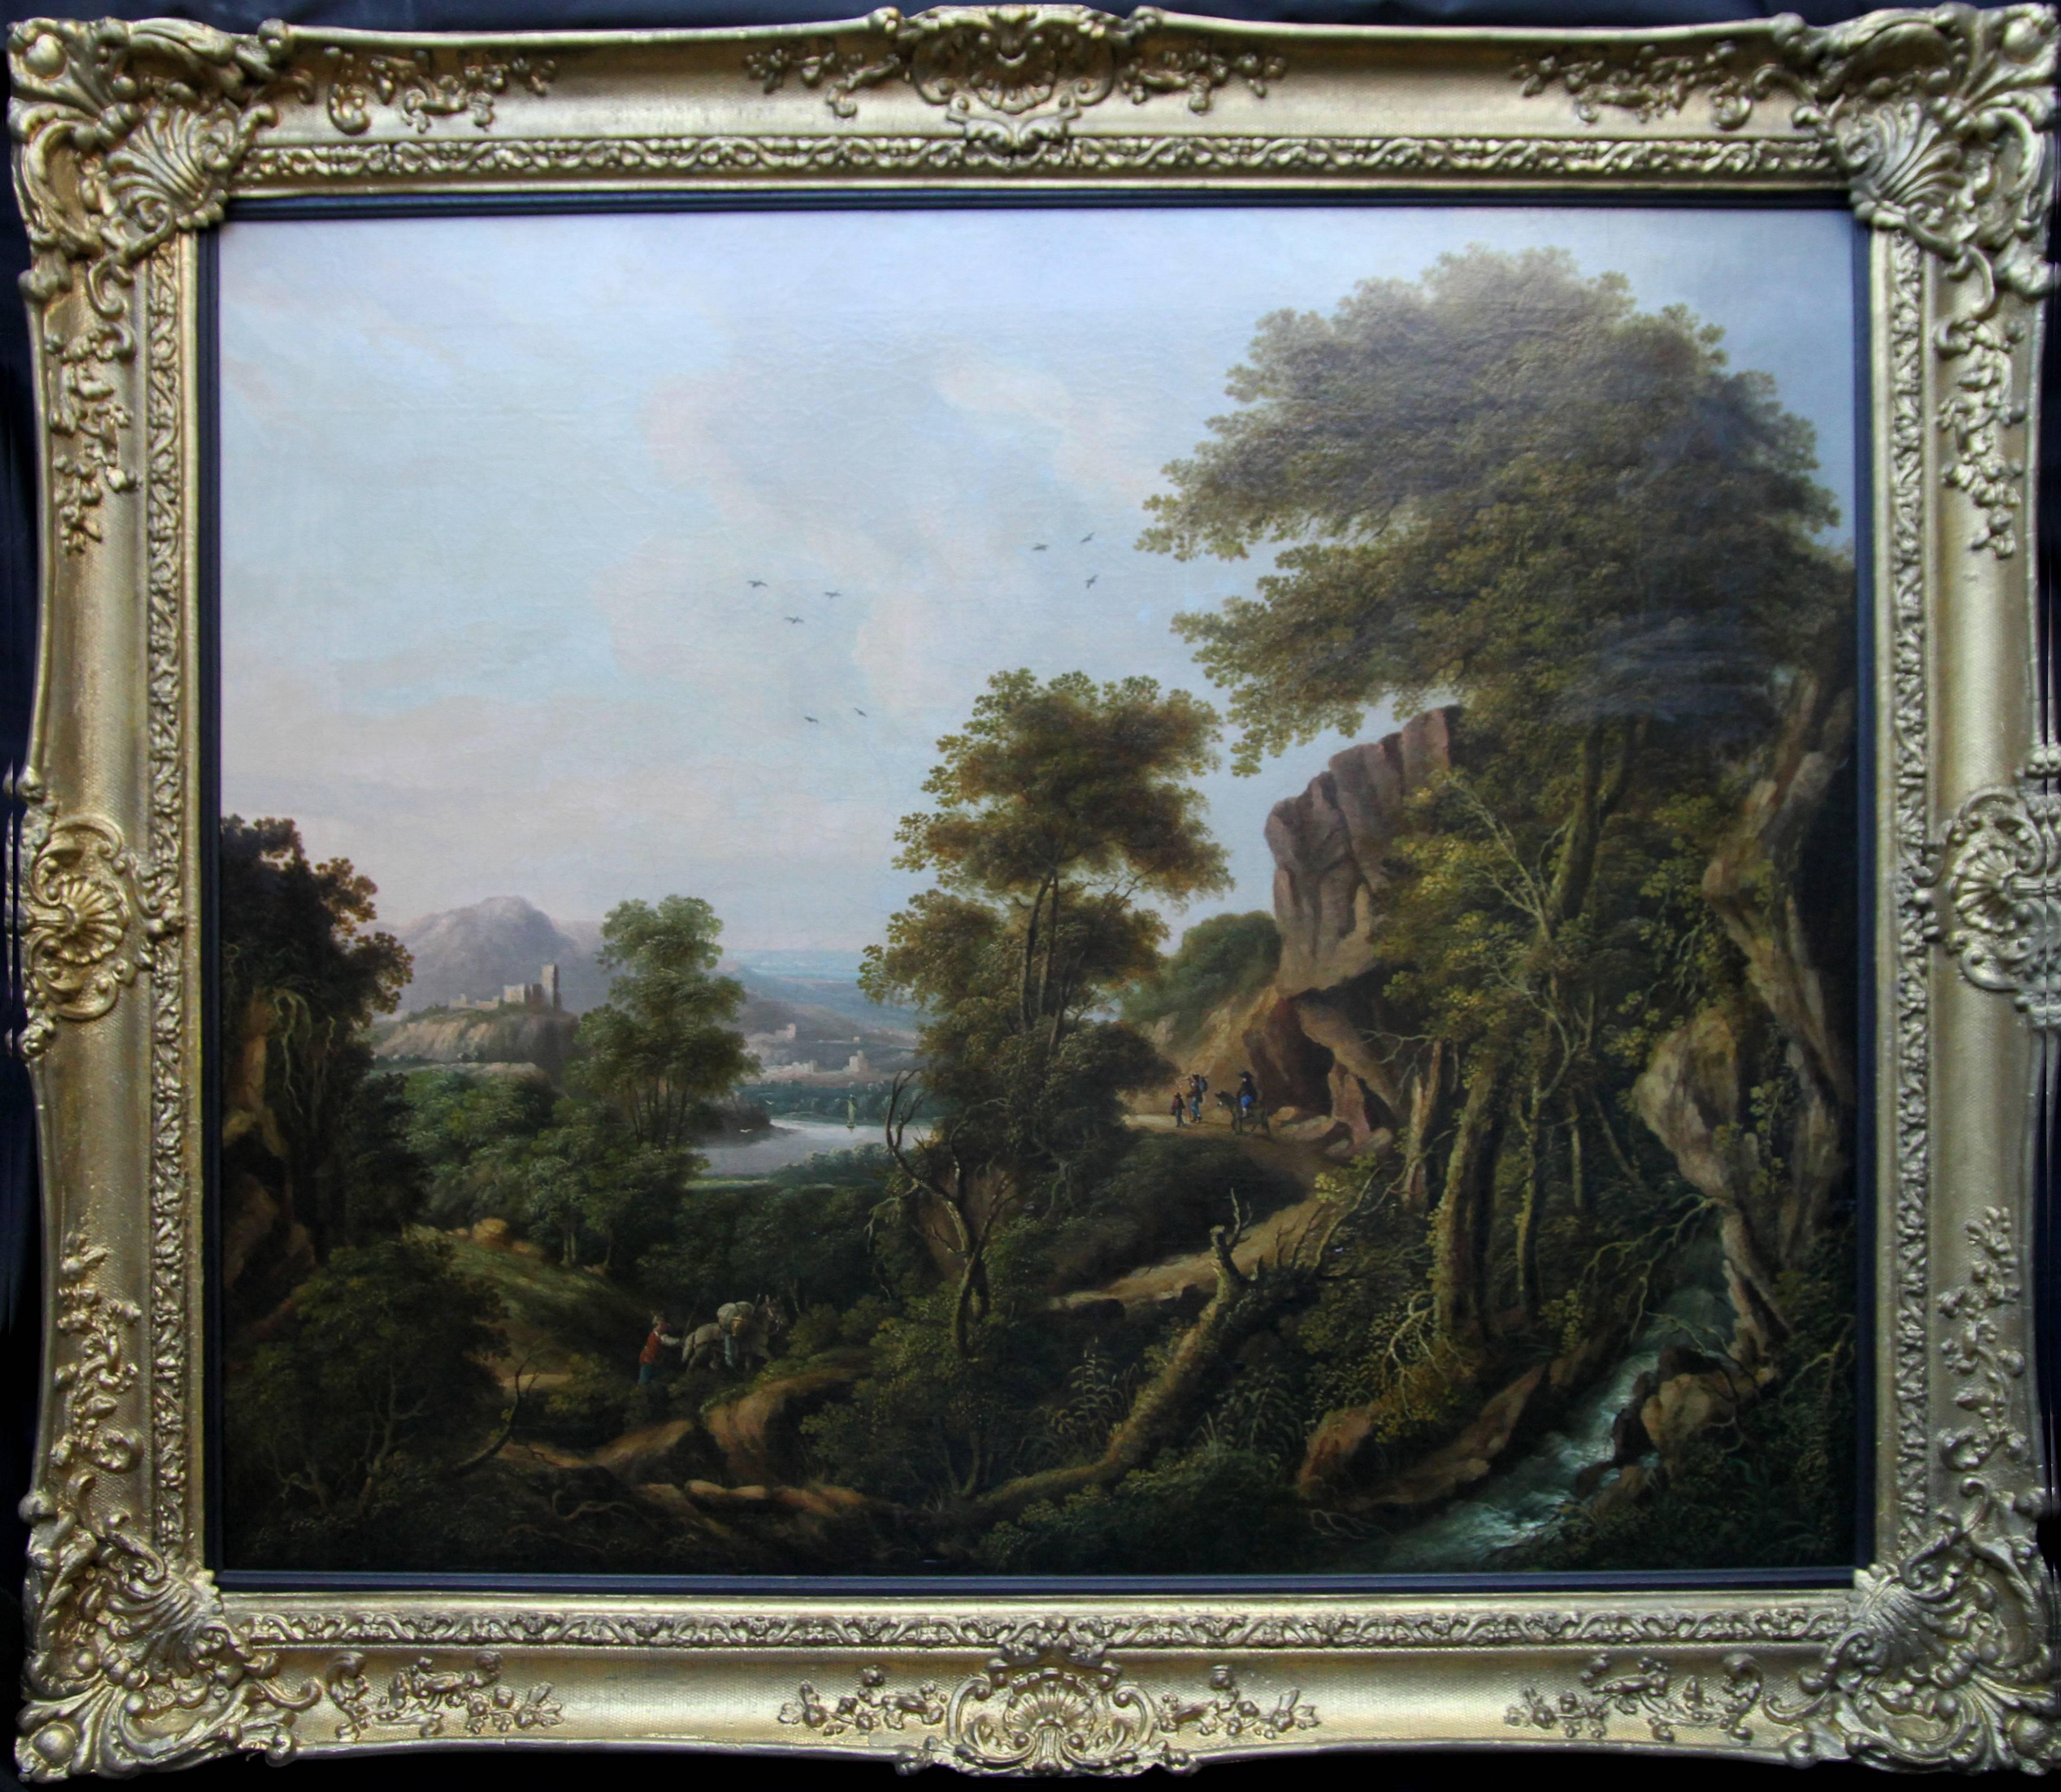 Jacob Philipp Hackert (circle) Landscape Painting - Capriccio Arcadian Landscape - Dutch 18th century art Old Master oil painting  